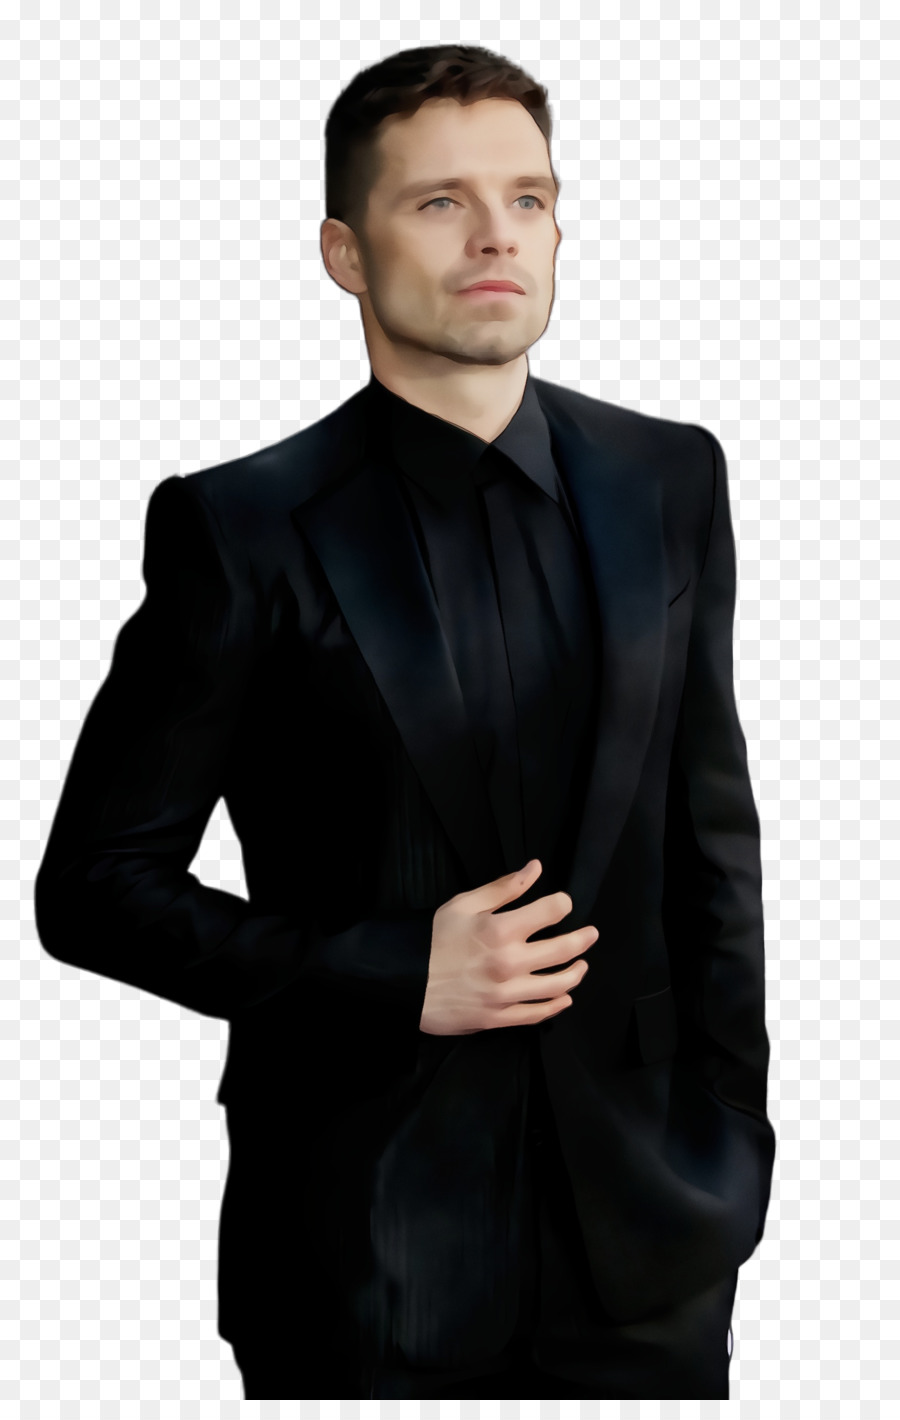 suit black formal wear clothing tuxedo